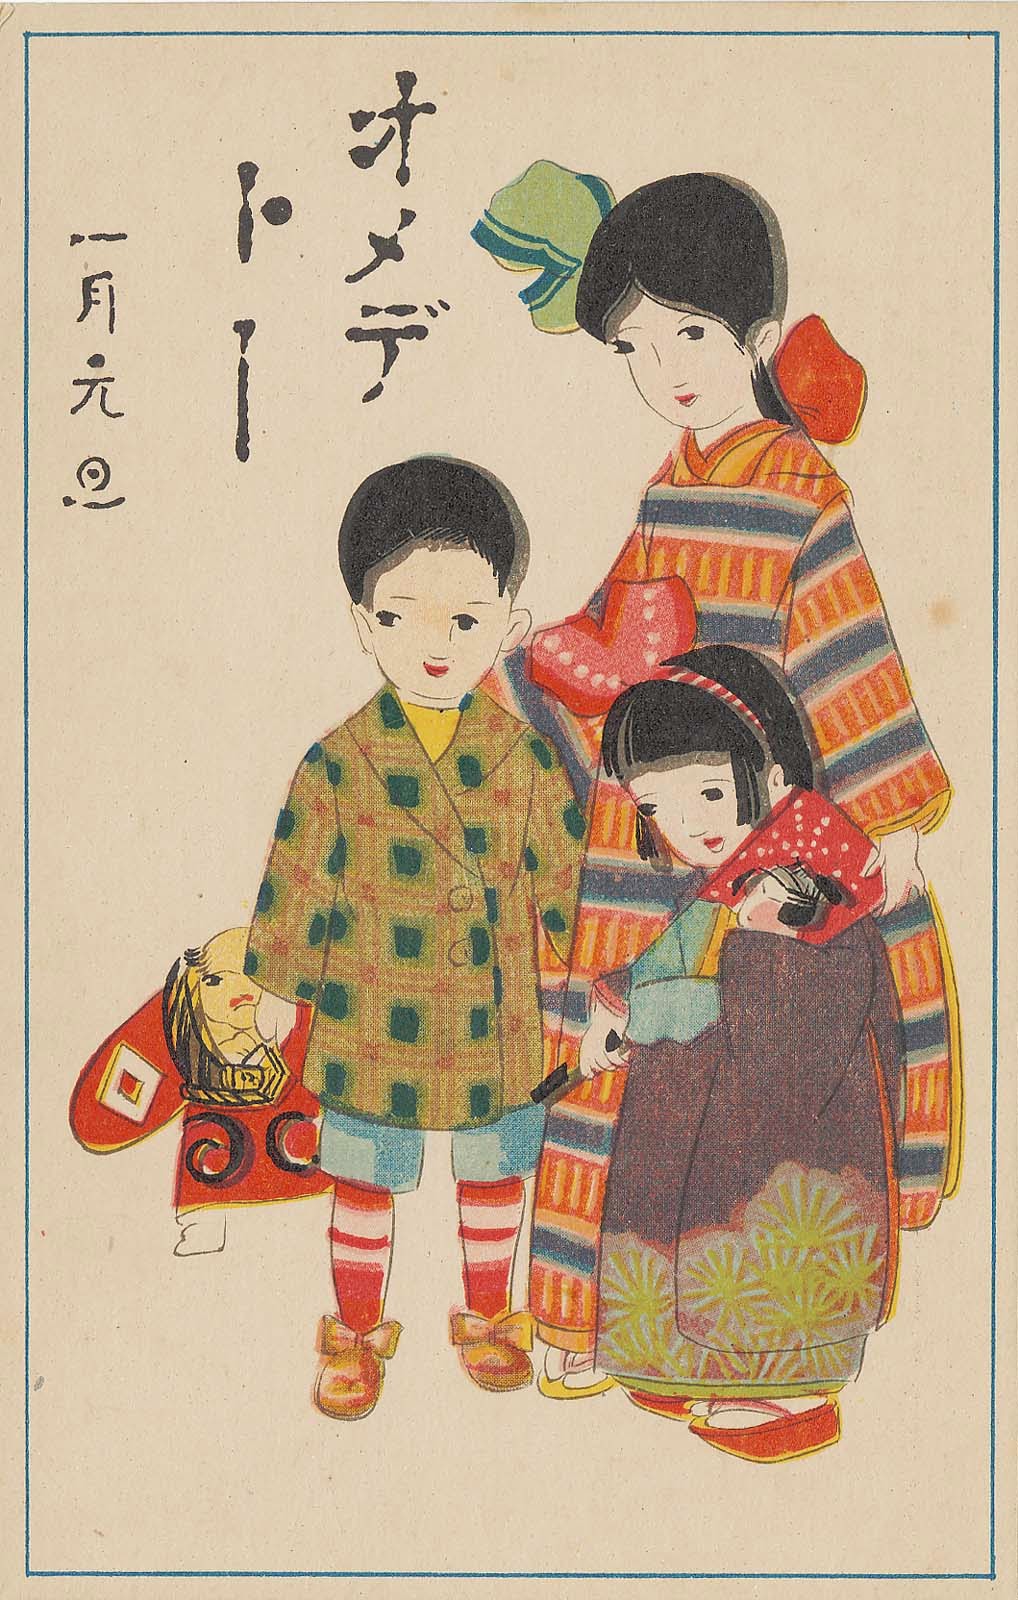 CHILDREN'S ILLUSTRATION: Japanese New Year's Cards